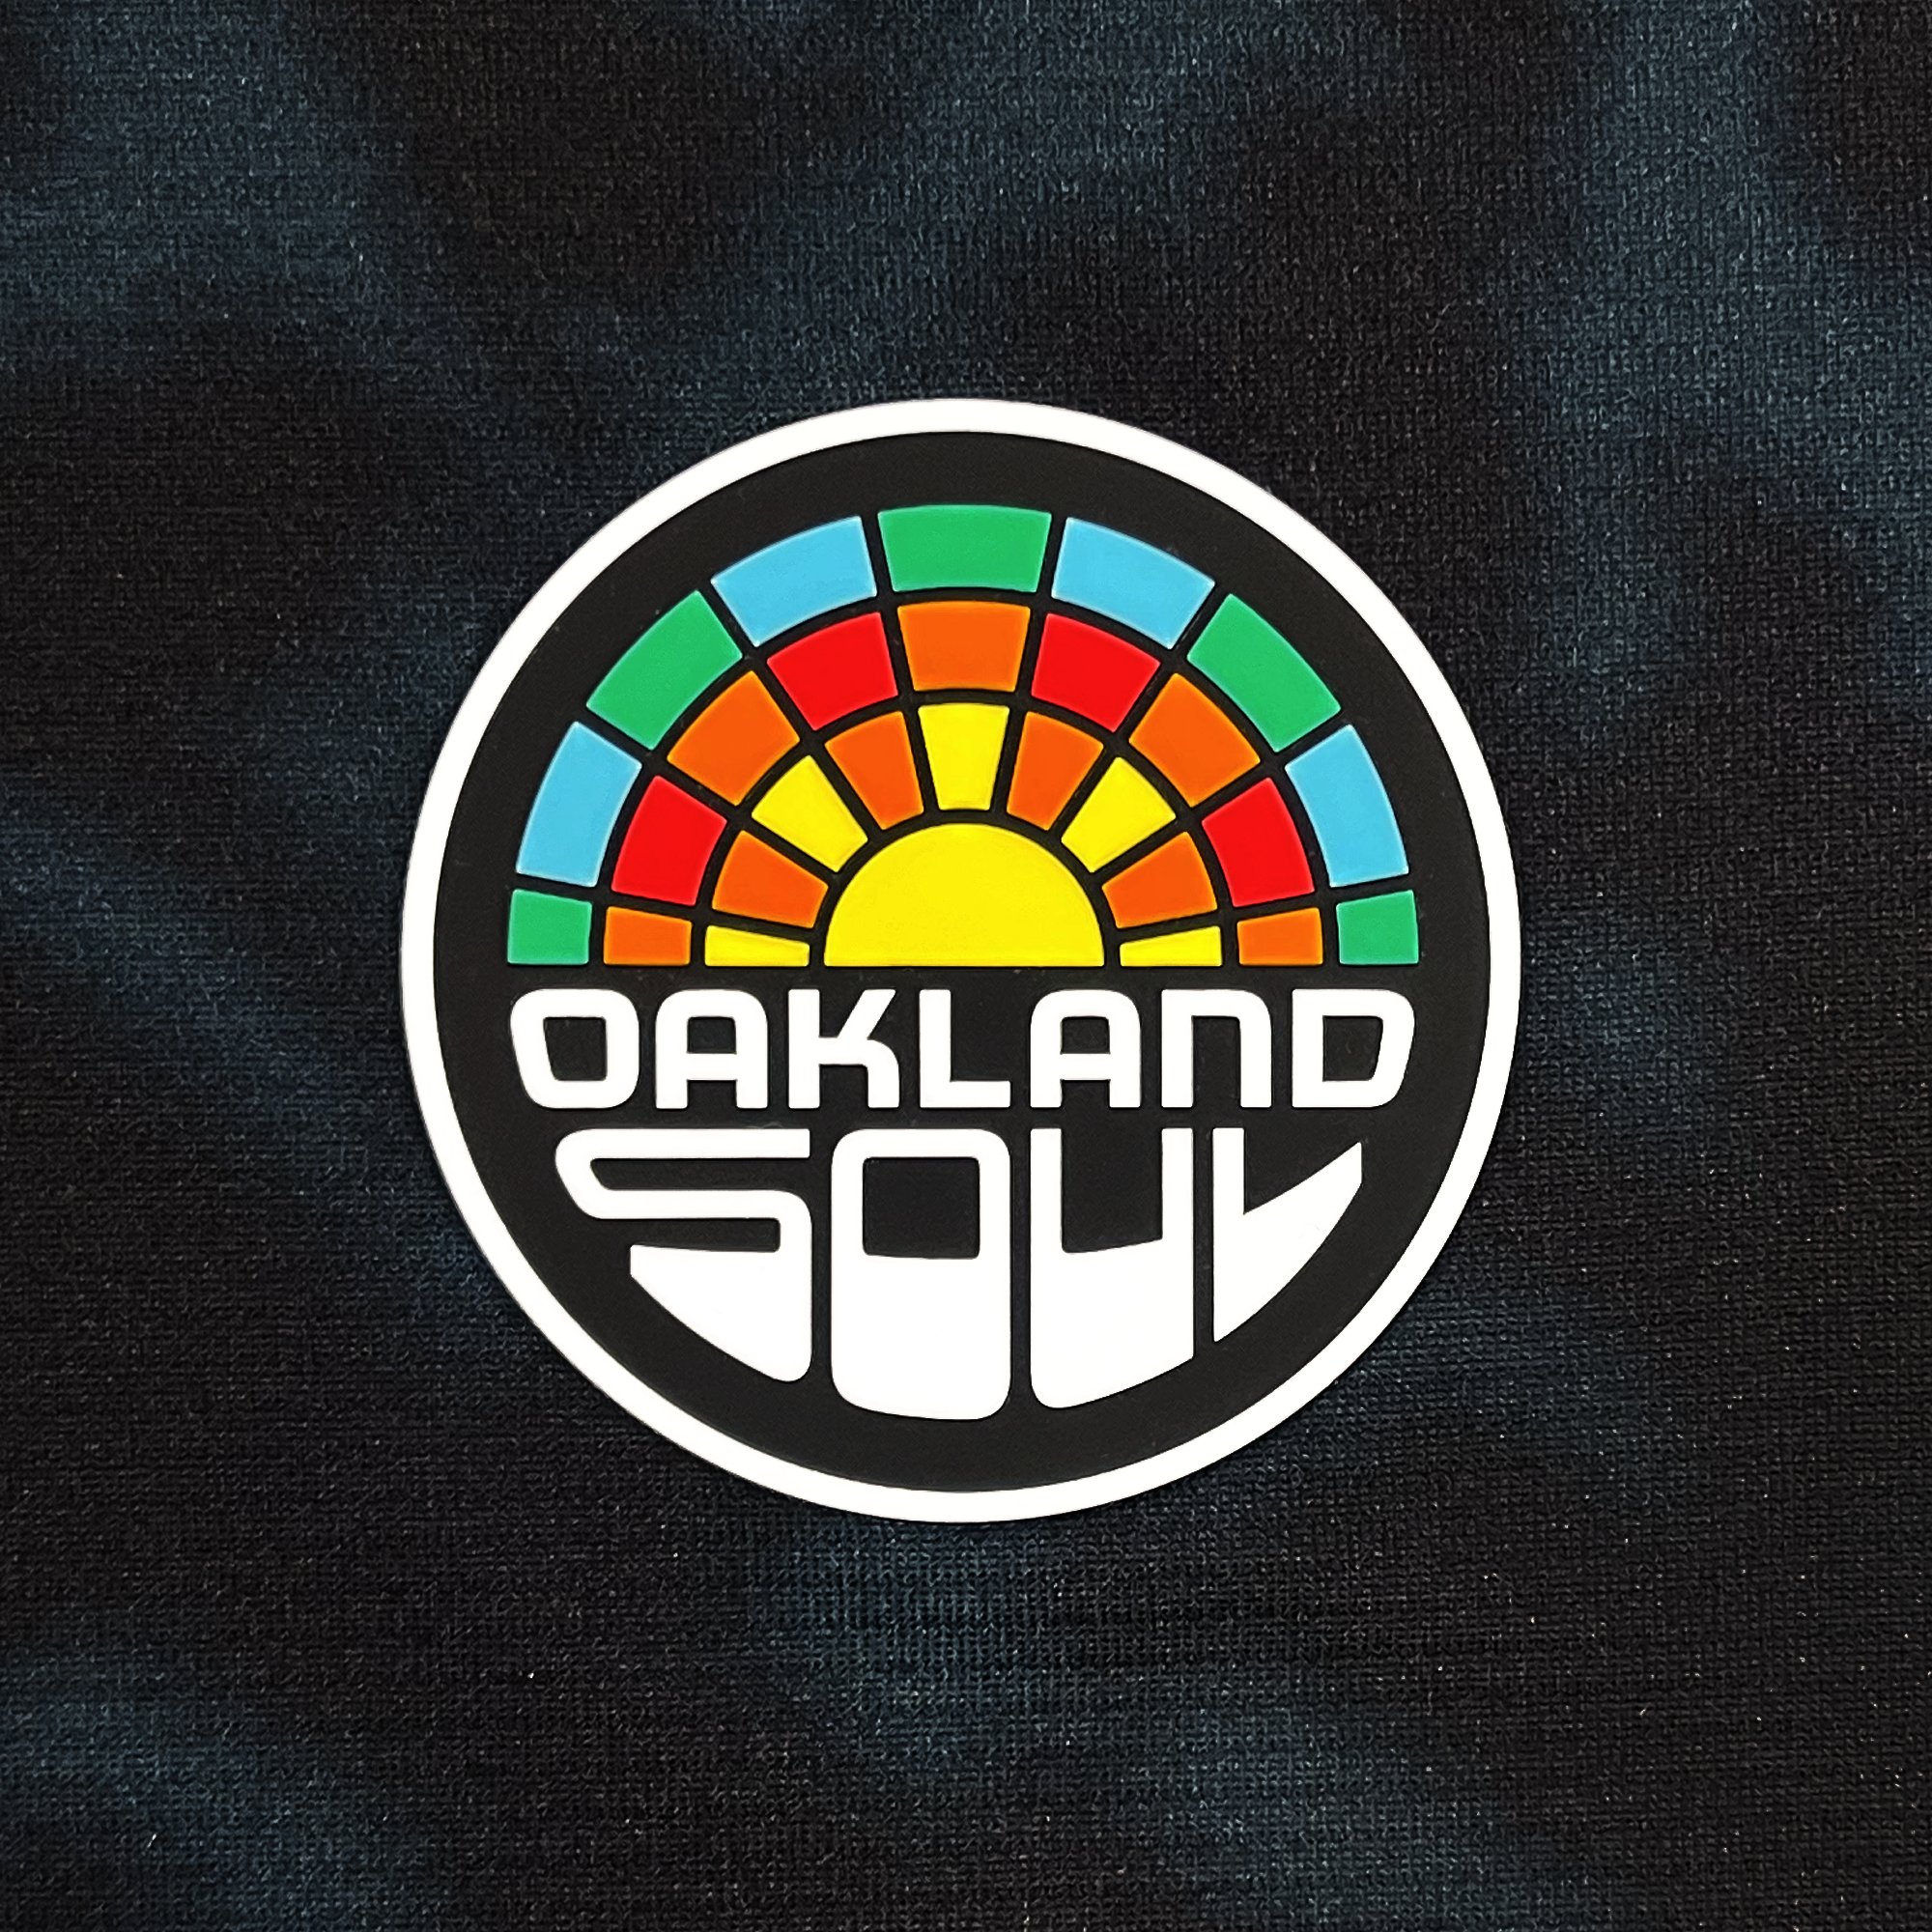 Detailed view of Oakland Soul crest on black unisex Oakland Soul SC Home jersey.